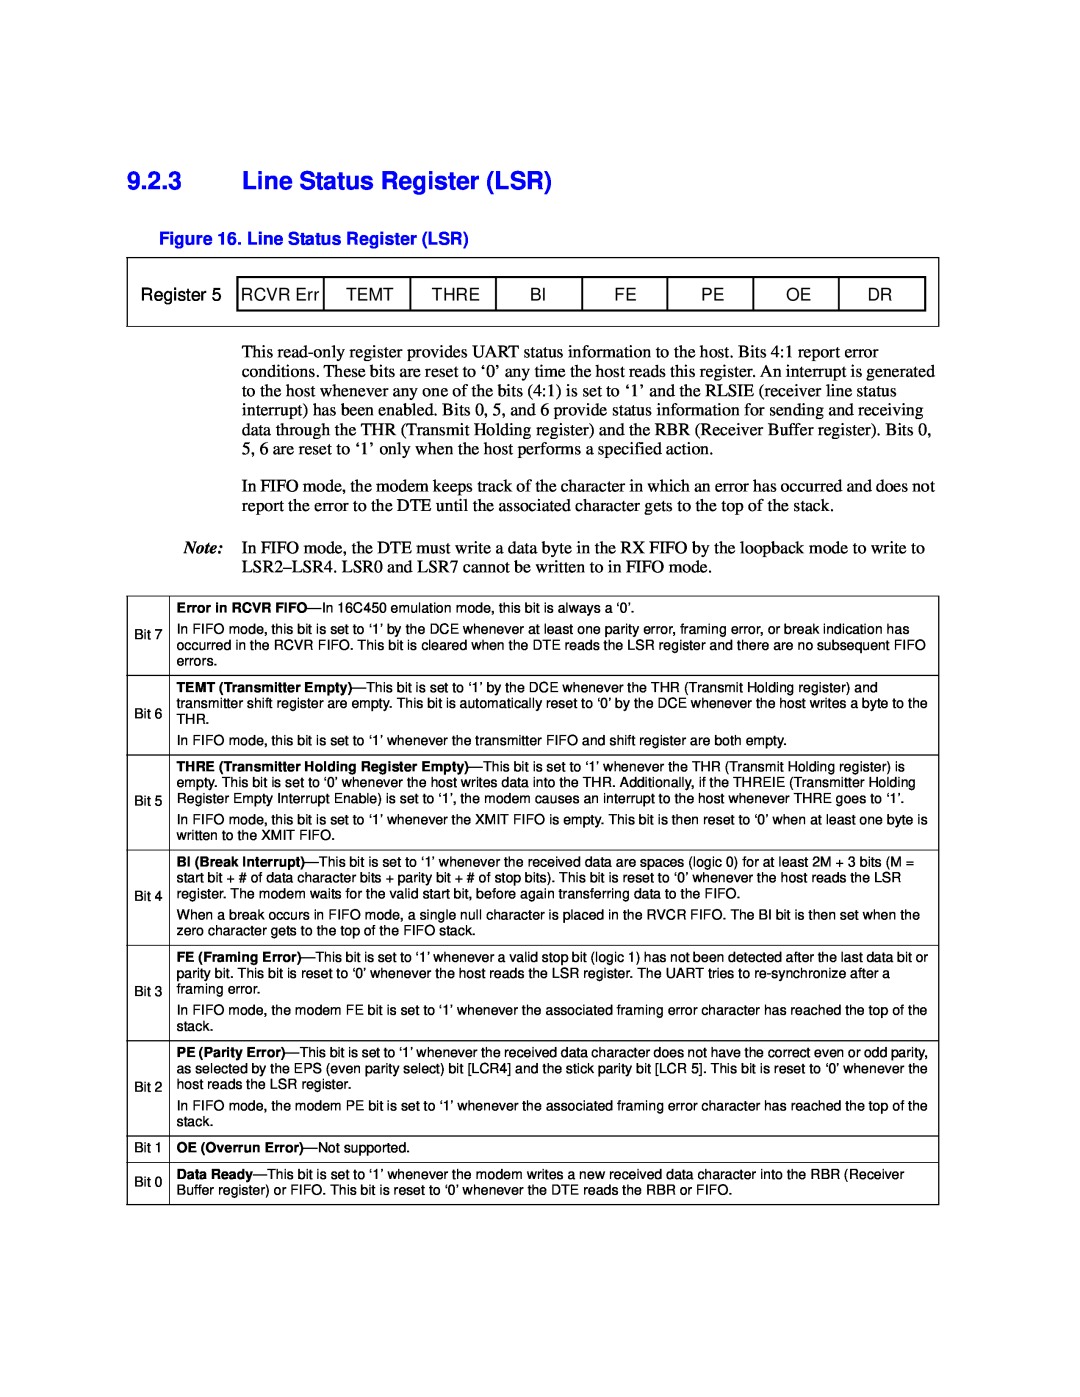 Intel 536EX manual 9.2.3Line Status Register LSR 